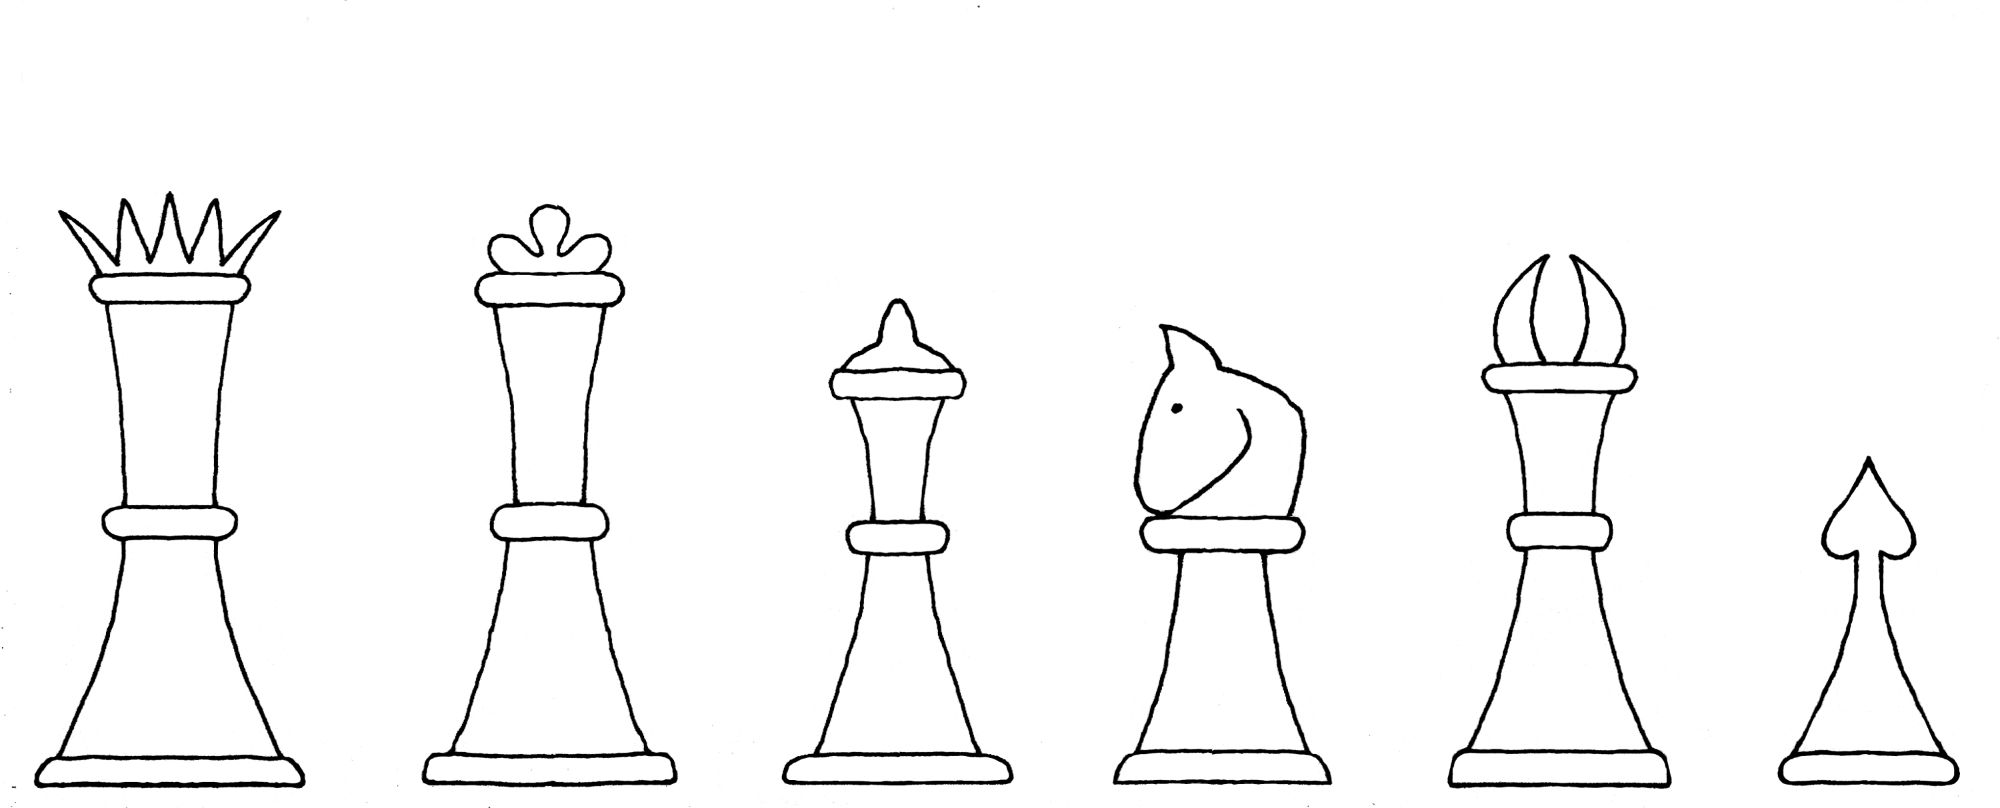 Lucena chess set interpretive diagram